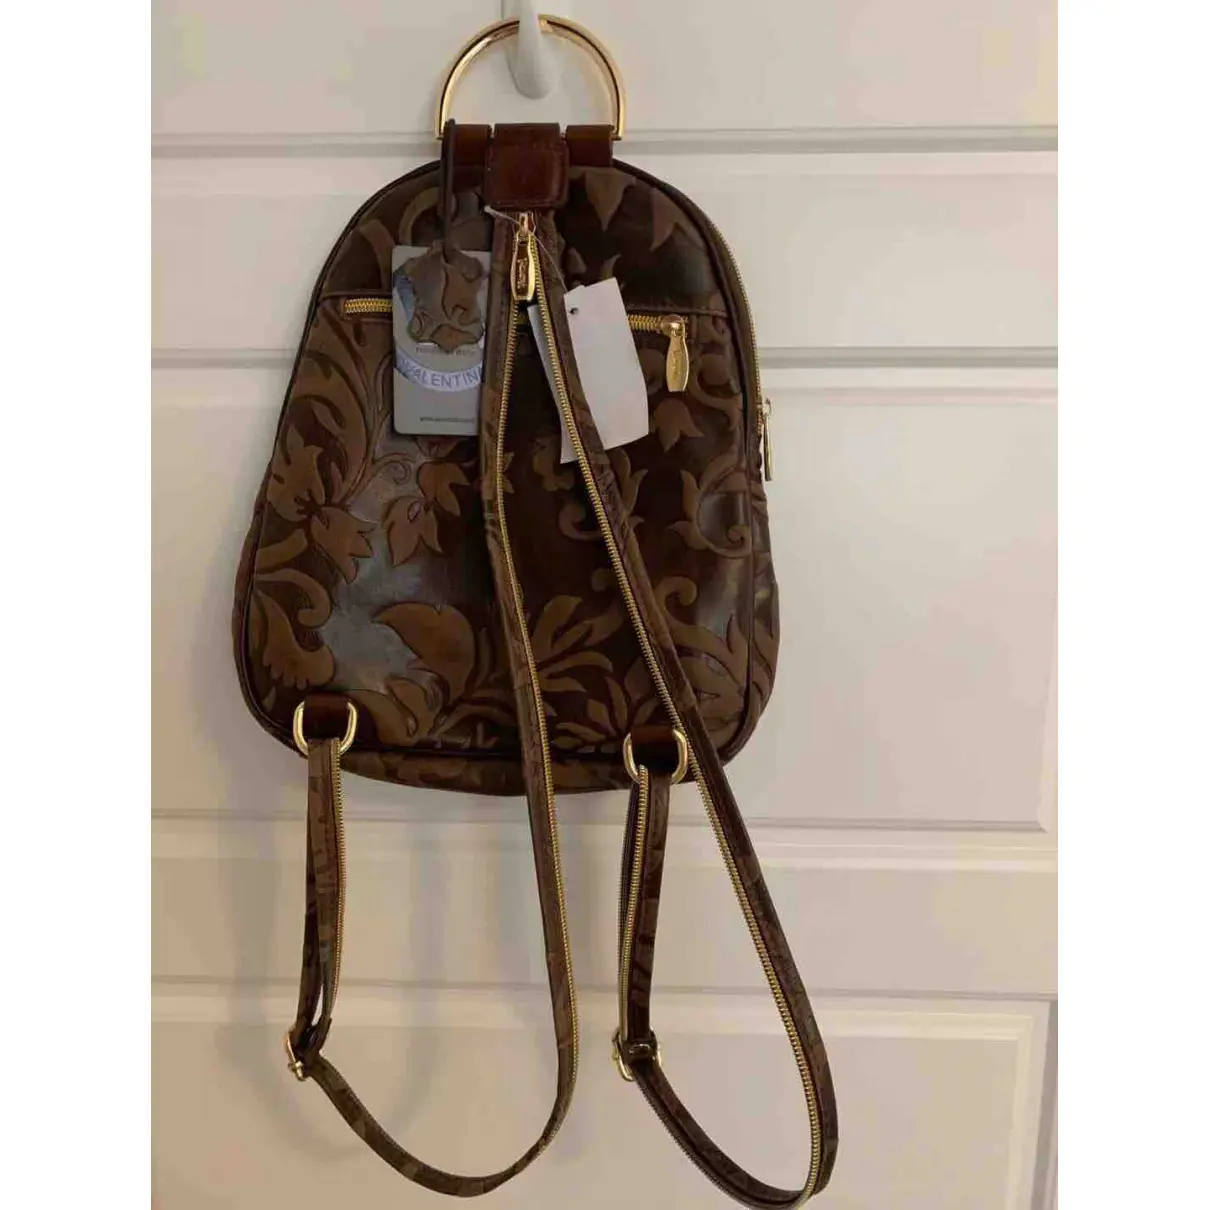 Buy Valentina Brugnatelli Leather backpack online